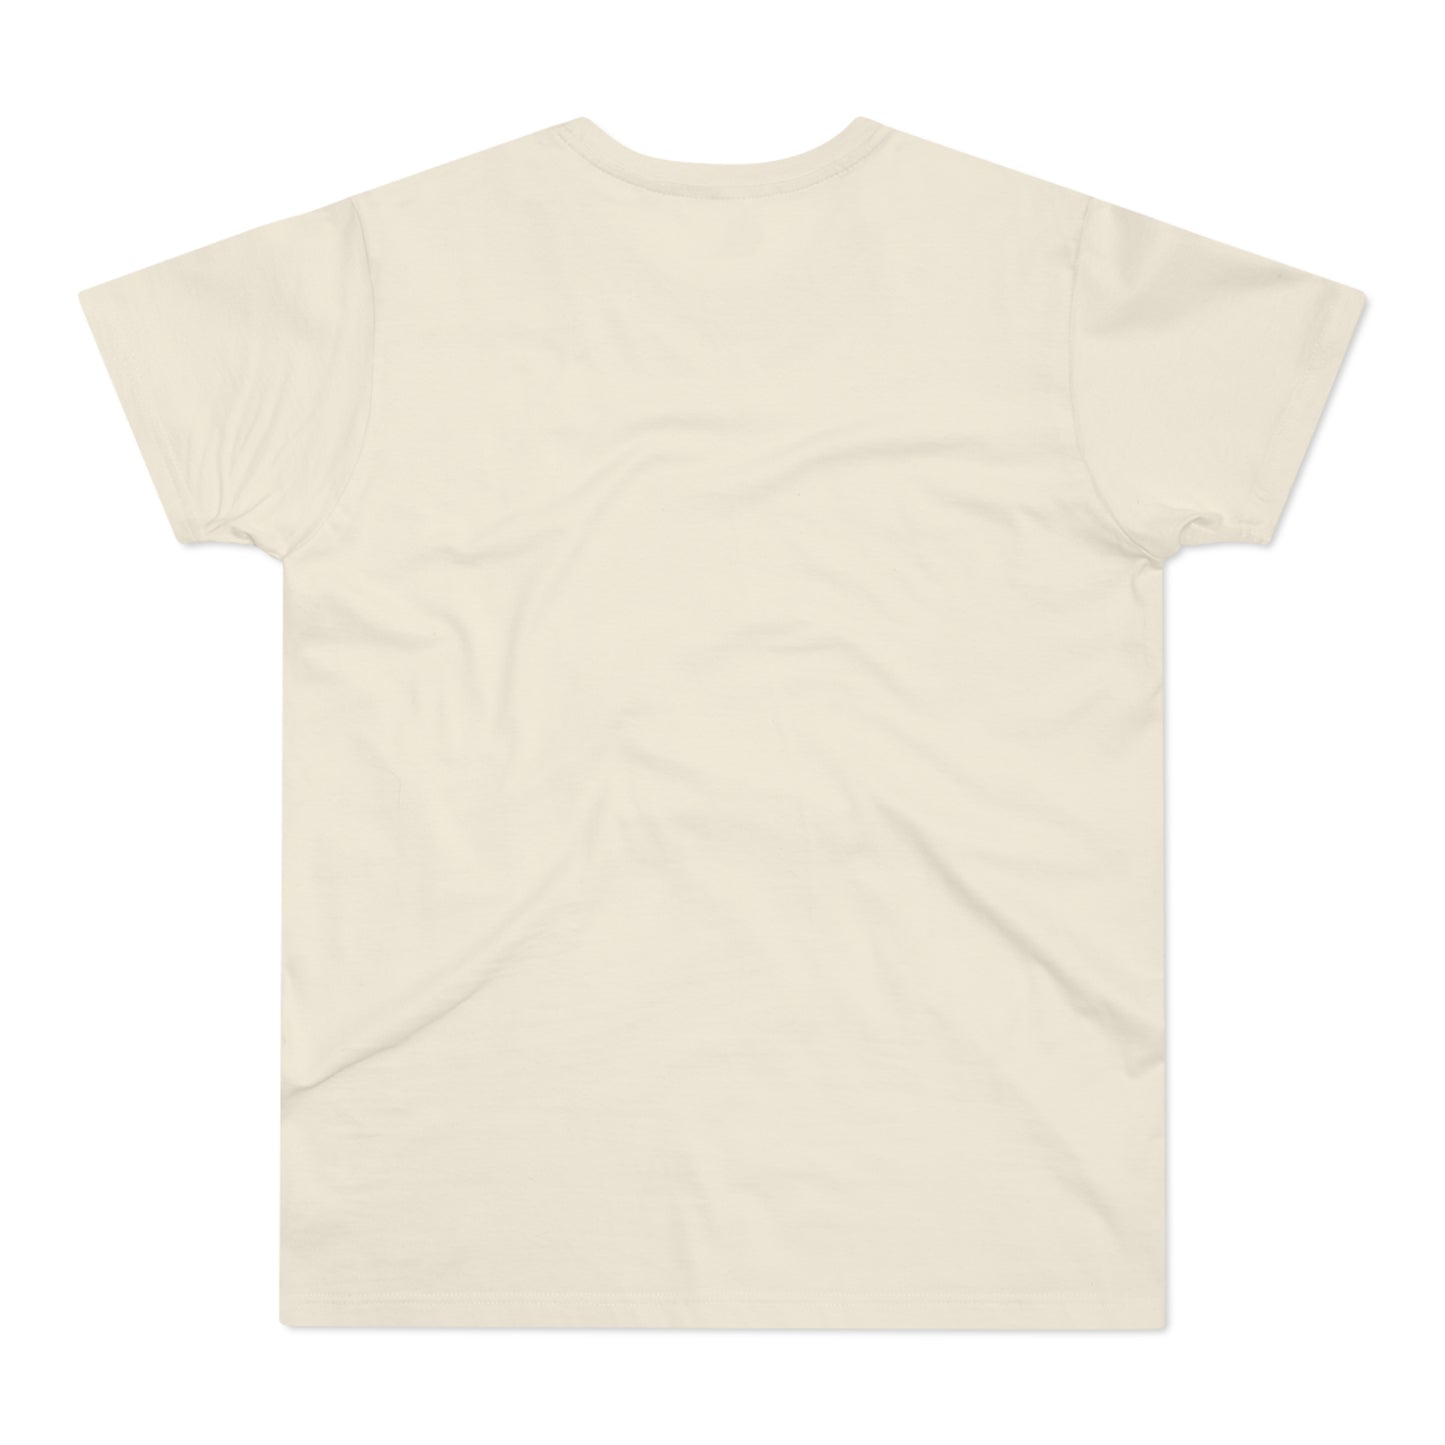 Copy of Camiseta de viajero, Camiseta buena vida, camiseta retro, camiseta de hombre, camiseta inspiradora, camiseta de viajero, camiseta pura vida